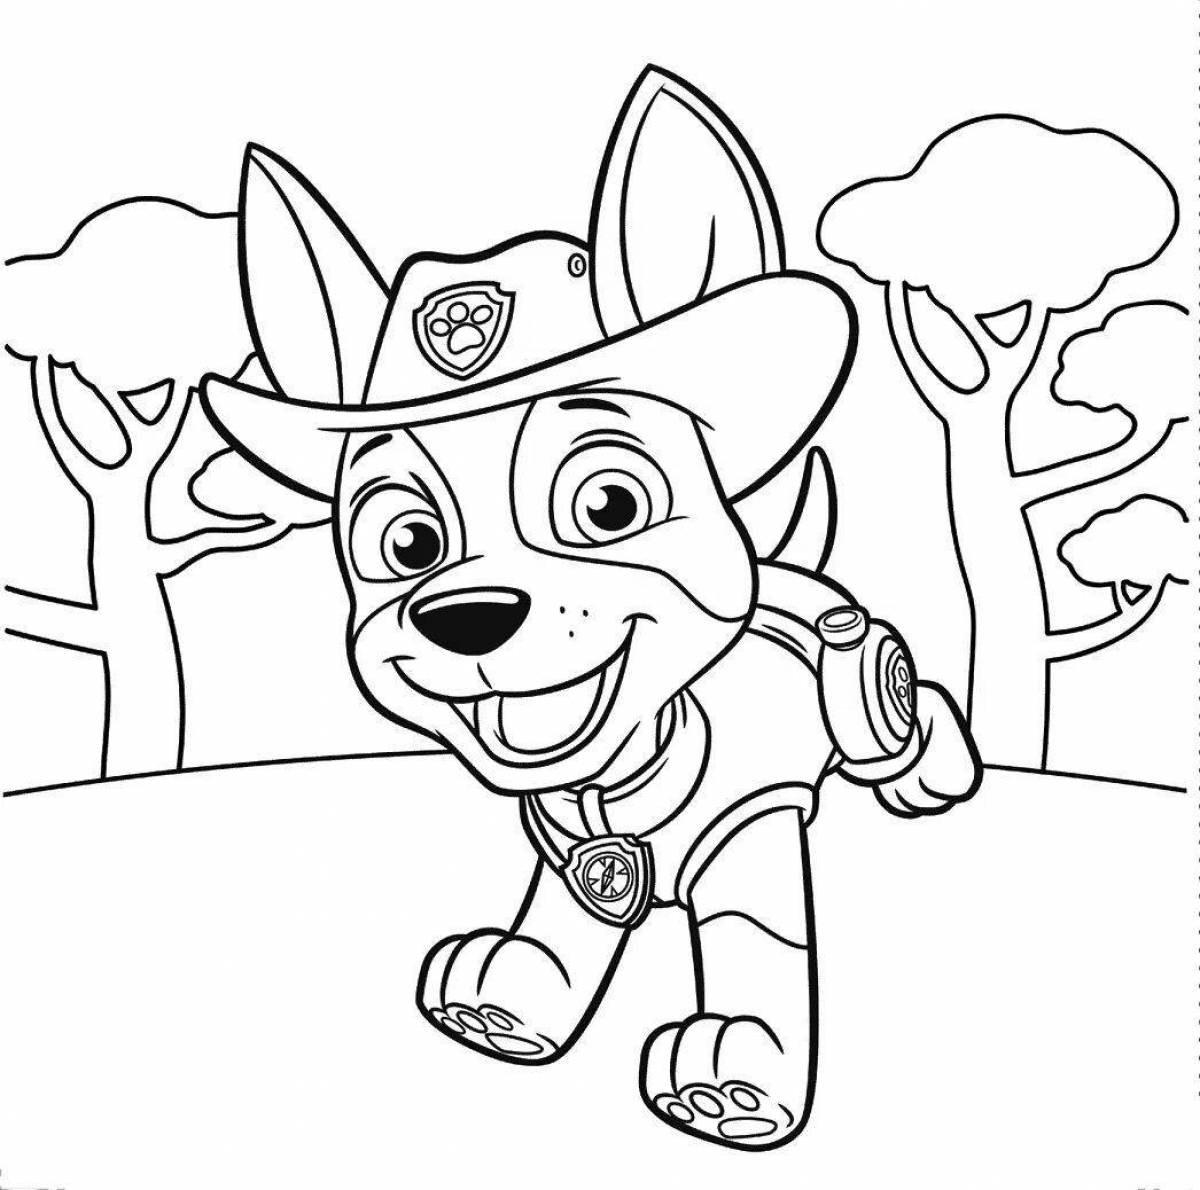 Paw patrol coloring page